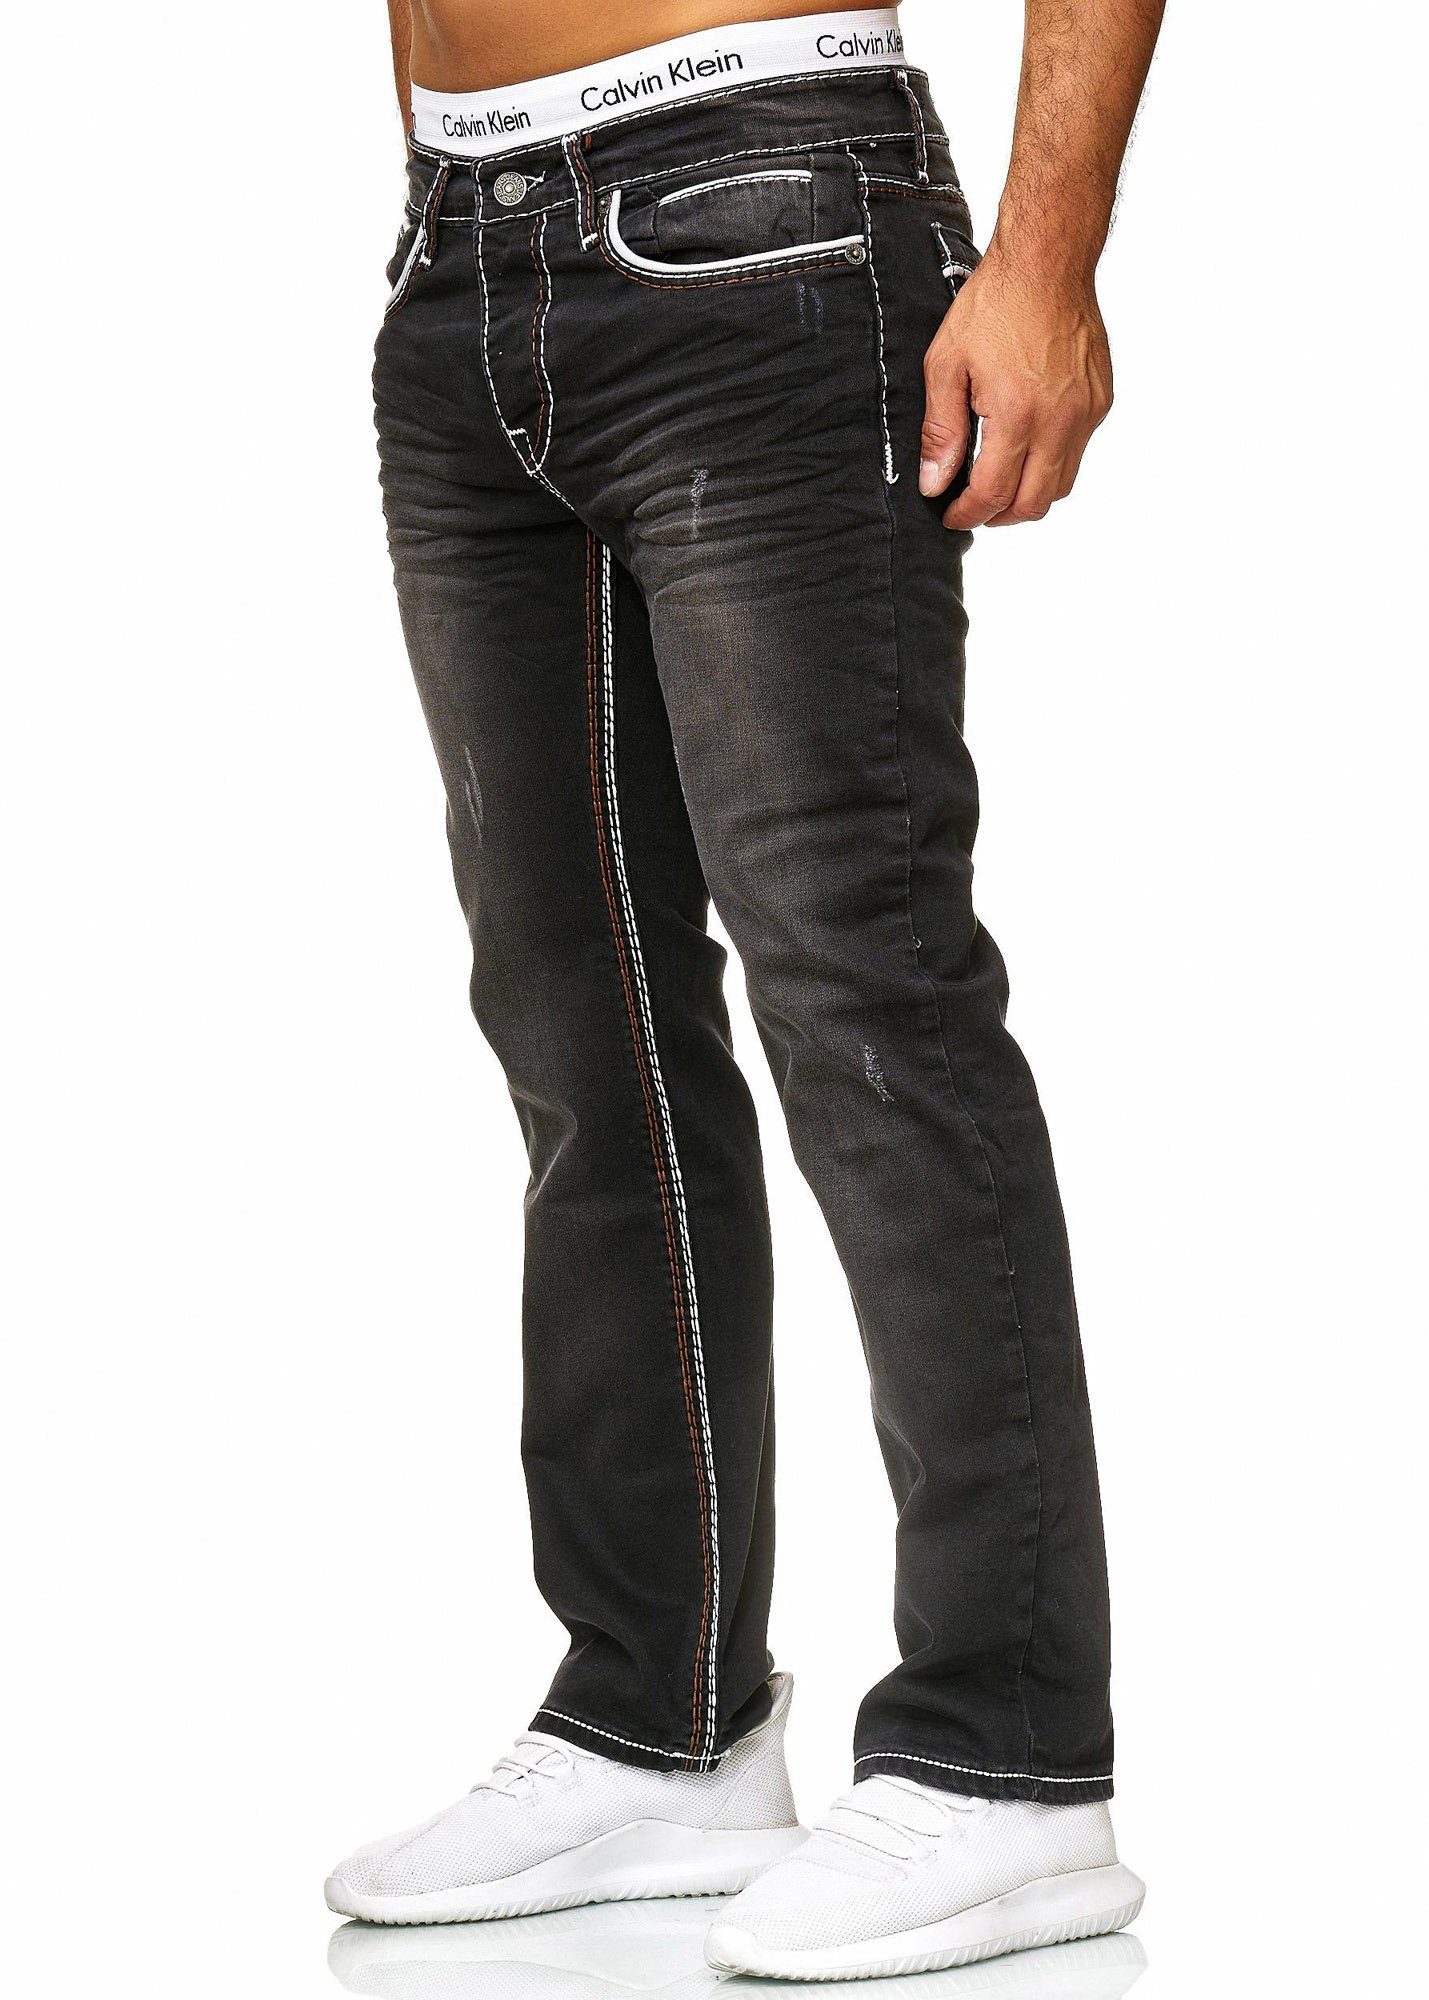 Code47 Modell 5167 Herren Slim Slim-fit-Jeans Code47 Fit Used Denim Jeans Design